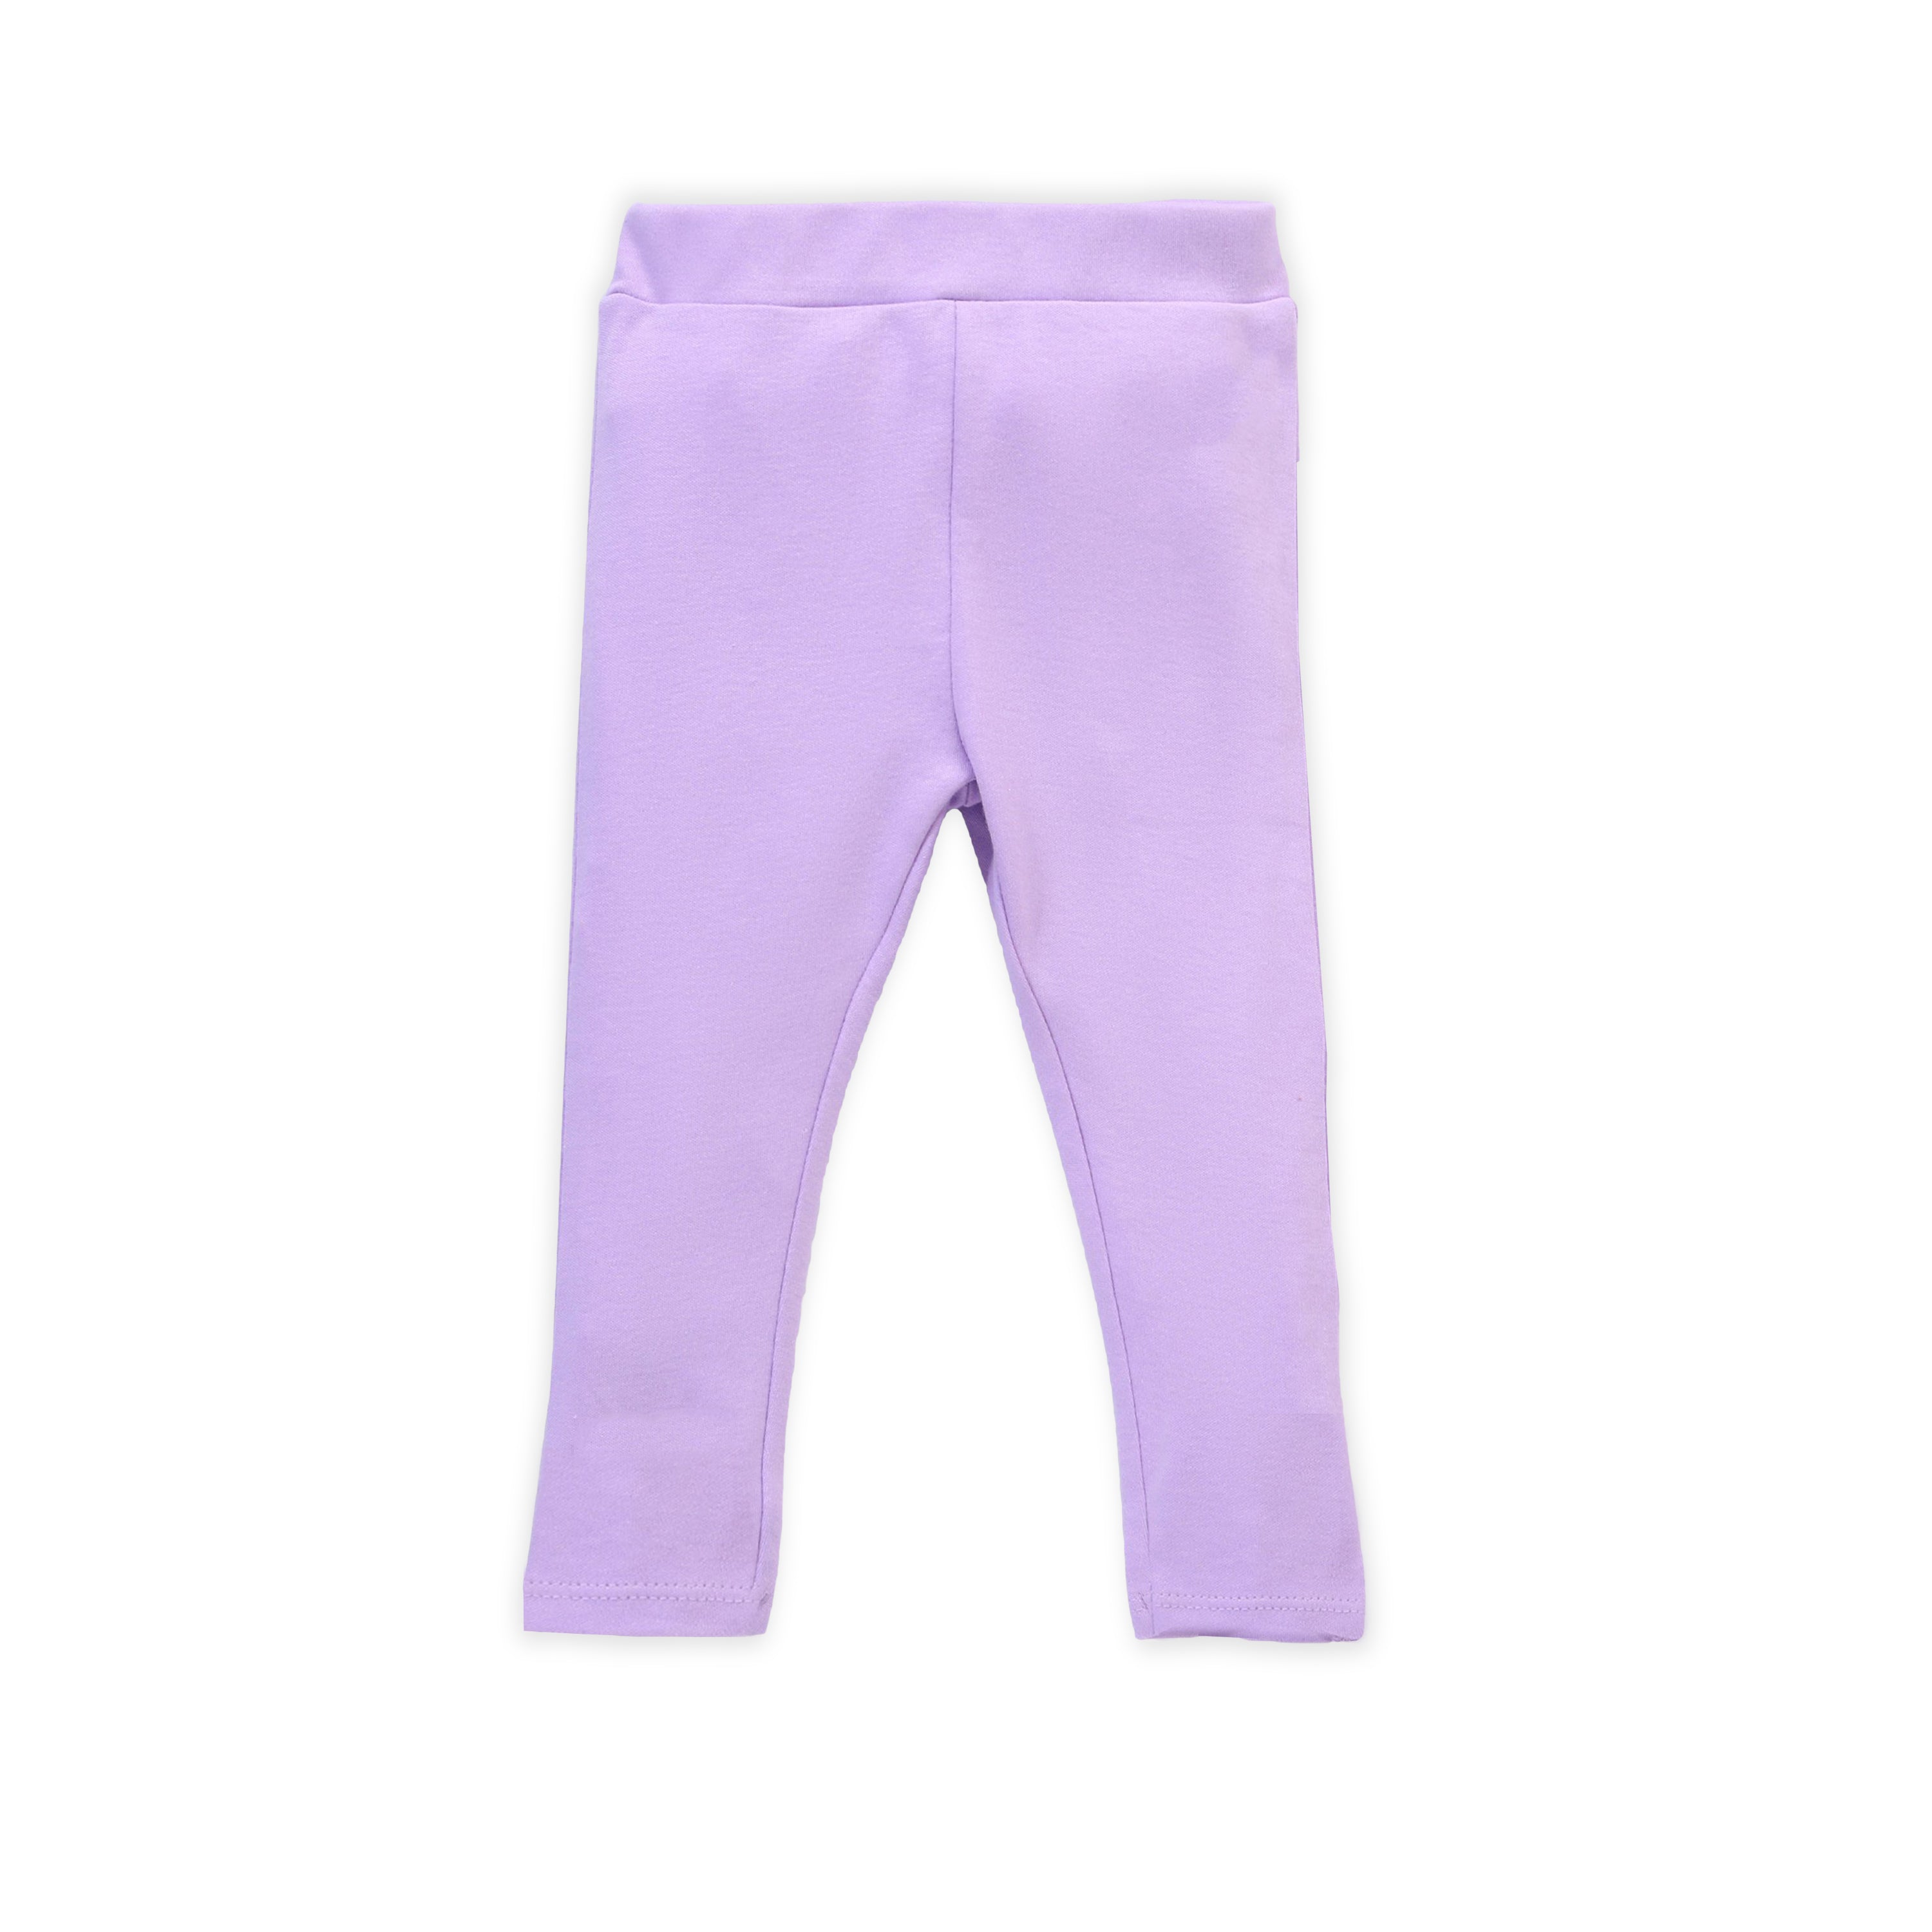 Kids Violet Solid Cotton Track pants